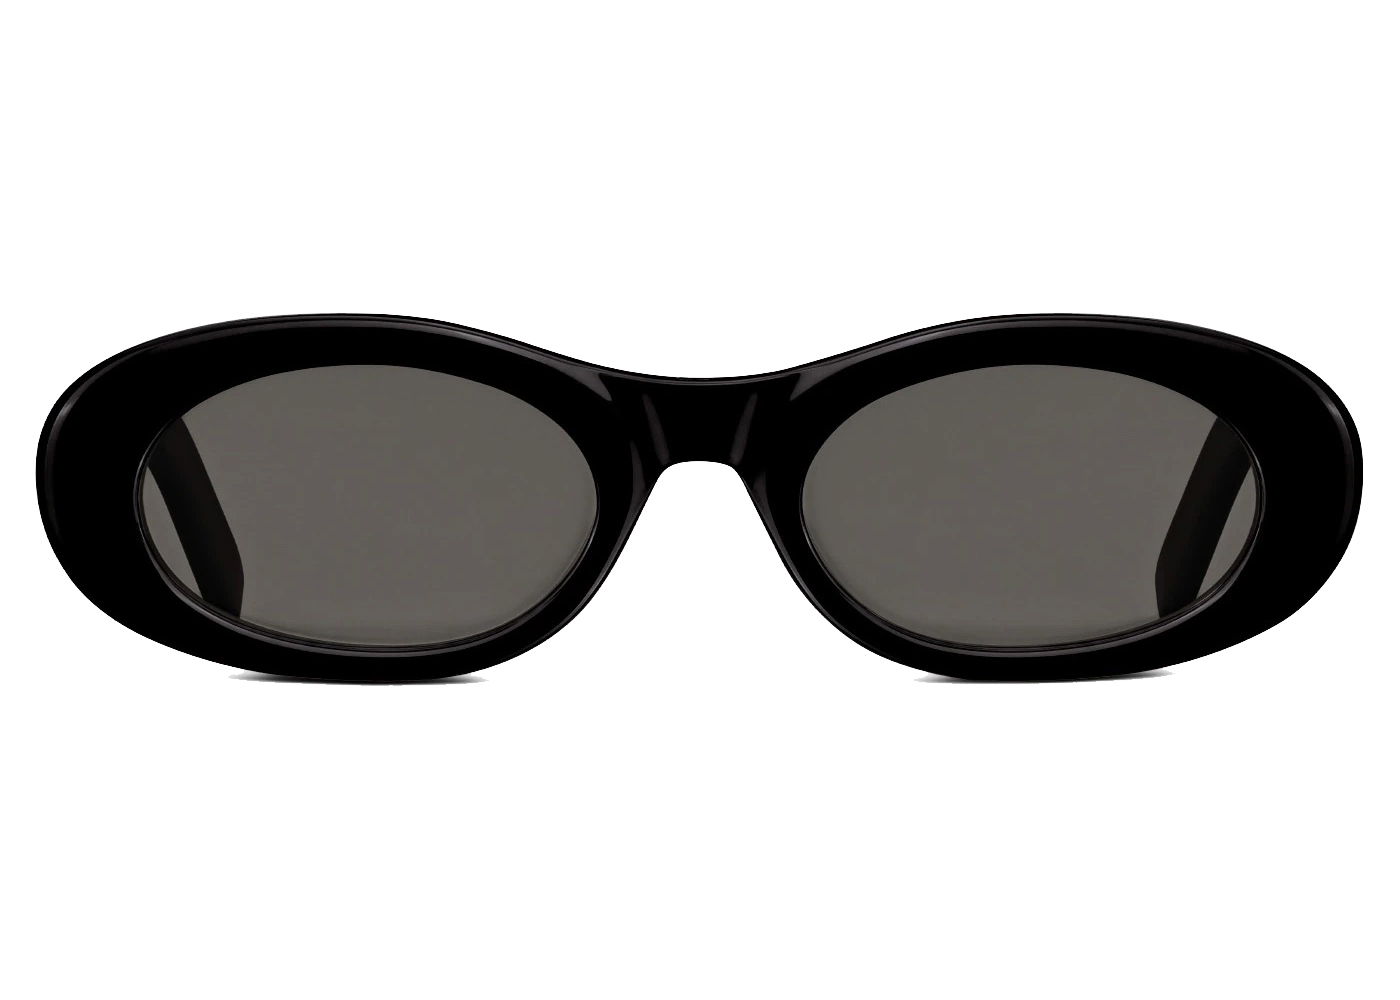 Dior CD Diamond R1I Rounded Sunglasses-